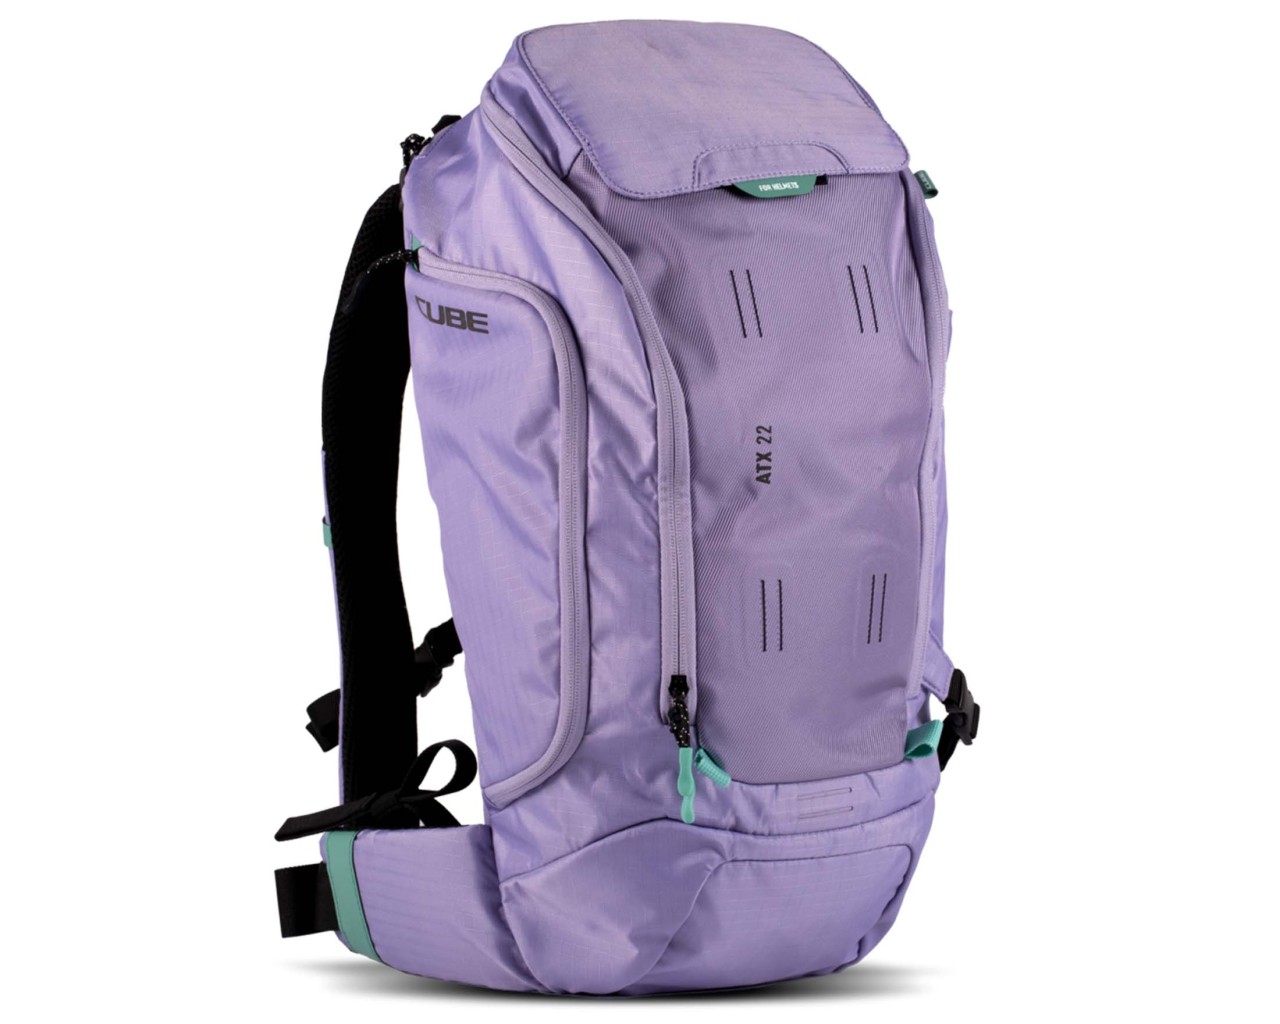 Cube Rucksack ATX 22 | violet